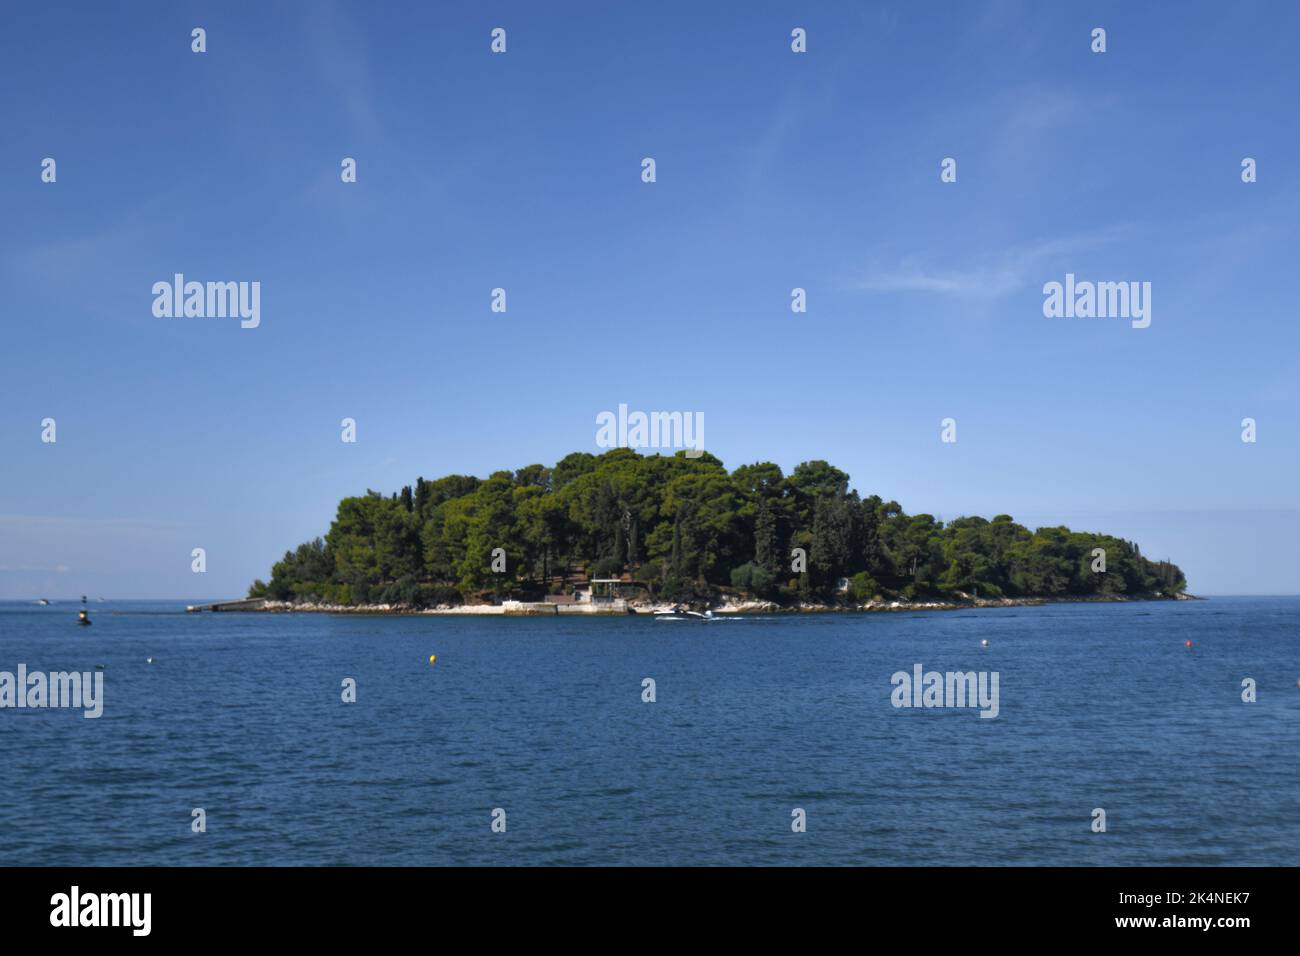 Isola di Santa Caterina (Otok Sveta Katarina), Rovigno, Croazia Foto Stock